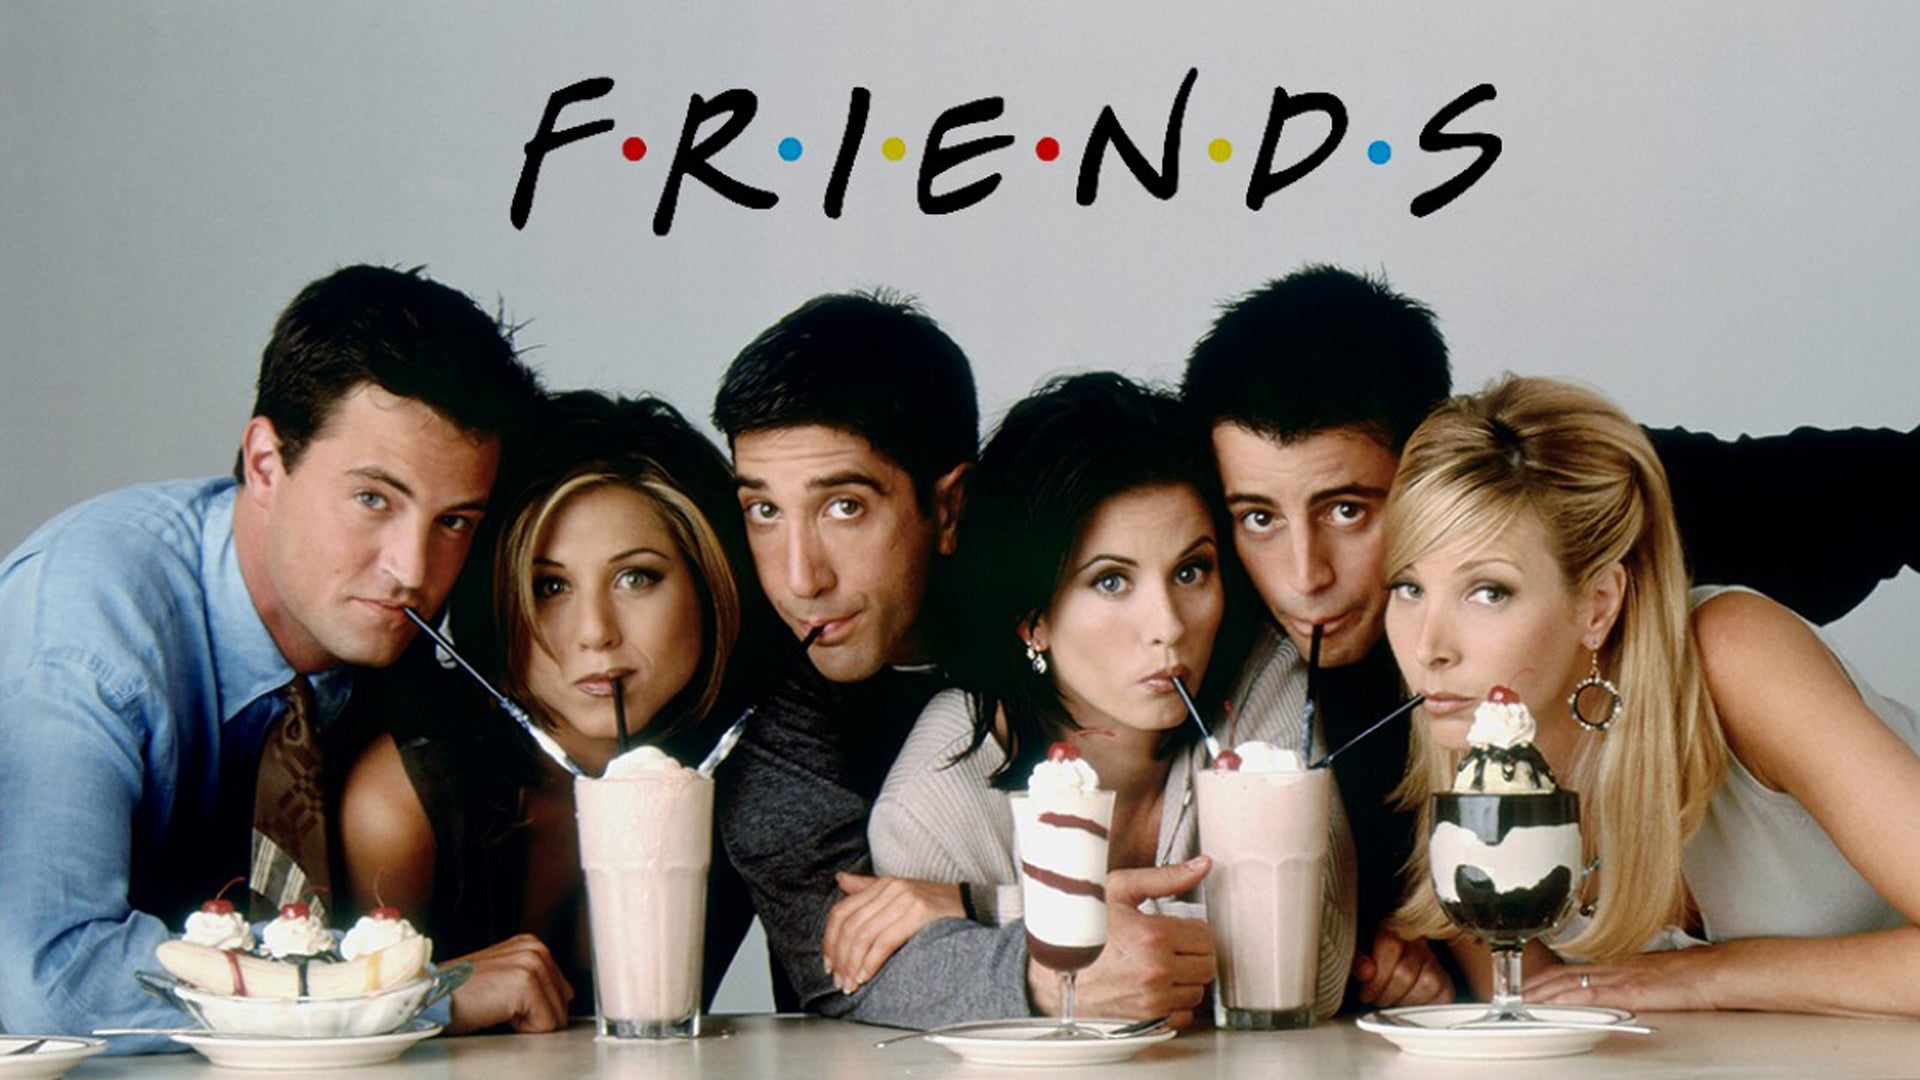 Friends: The Complete Series - Seasons 1-10